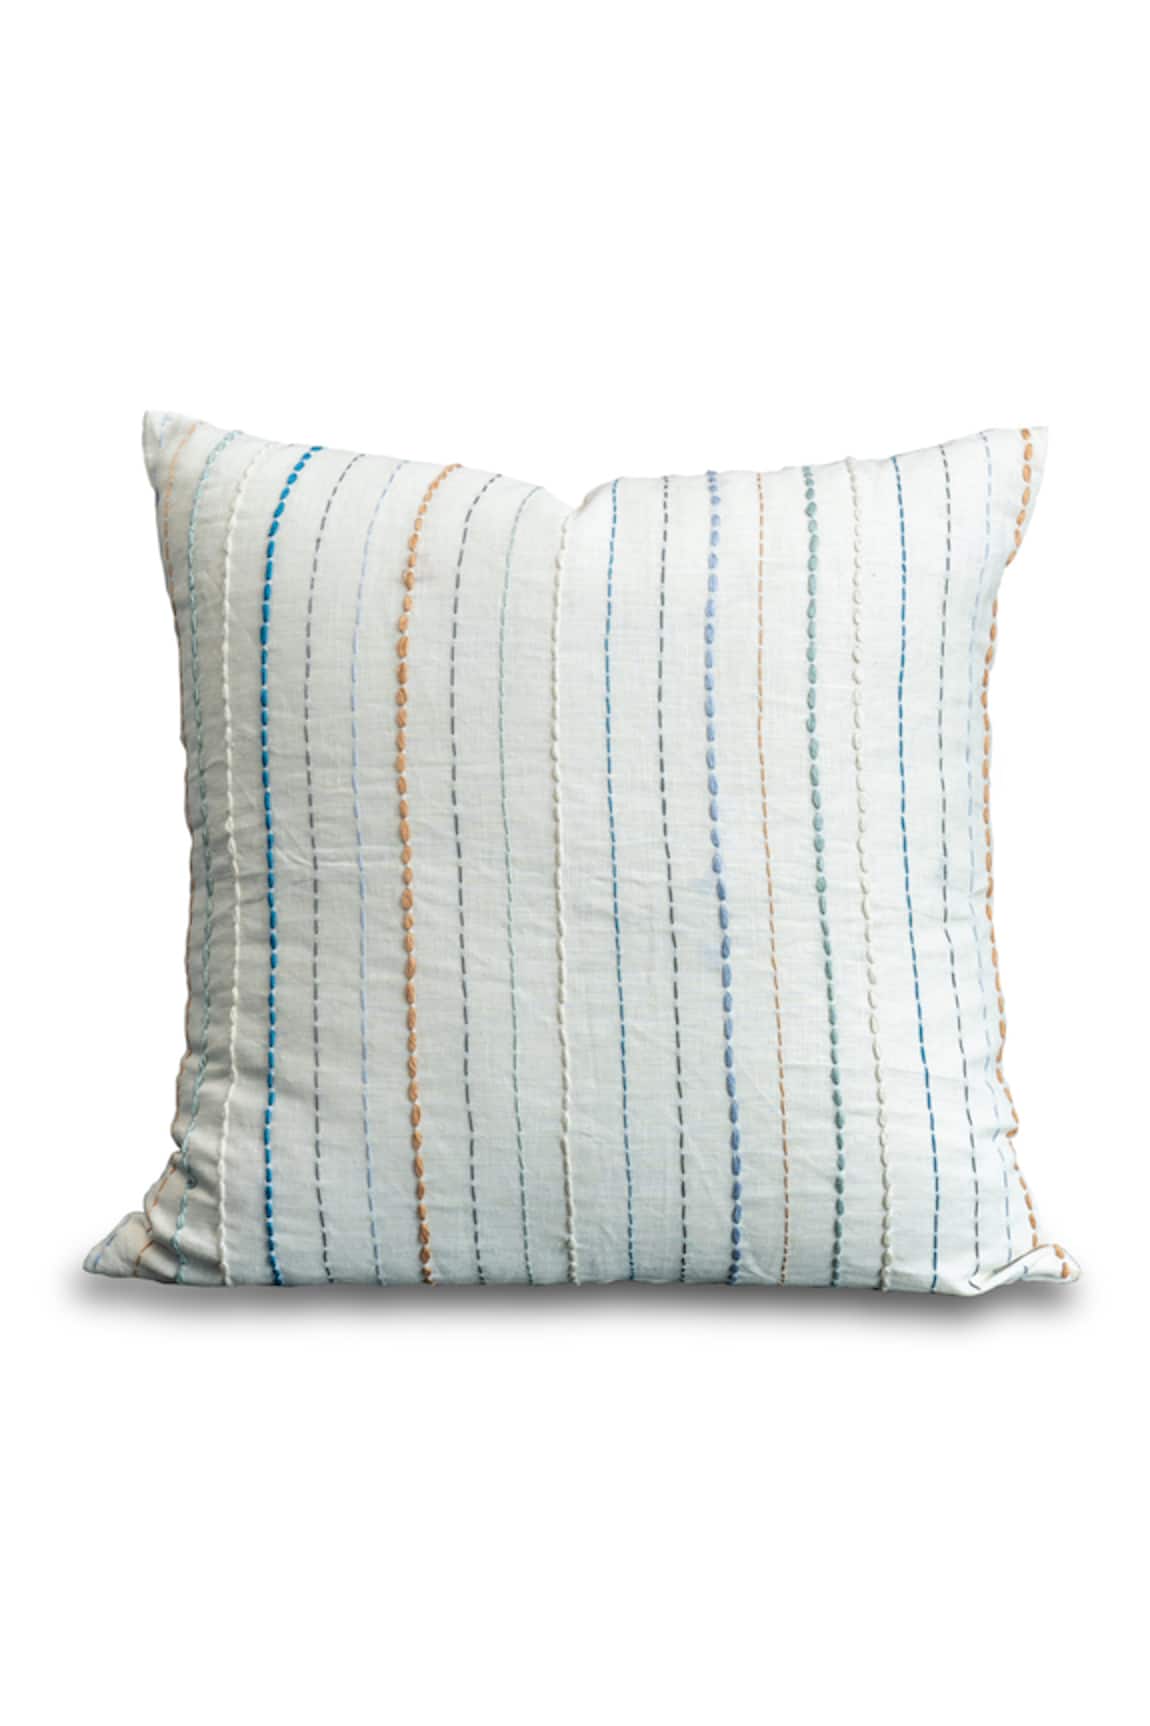 SITTARA WORKZ Lakeer Stripe Embroidered Cushion